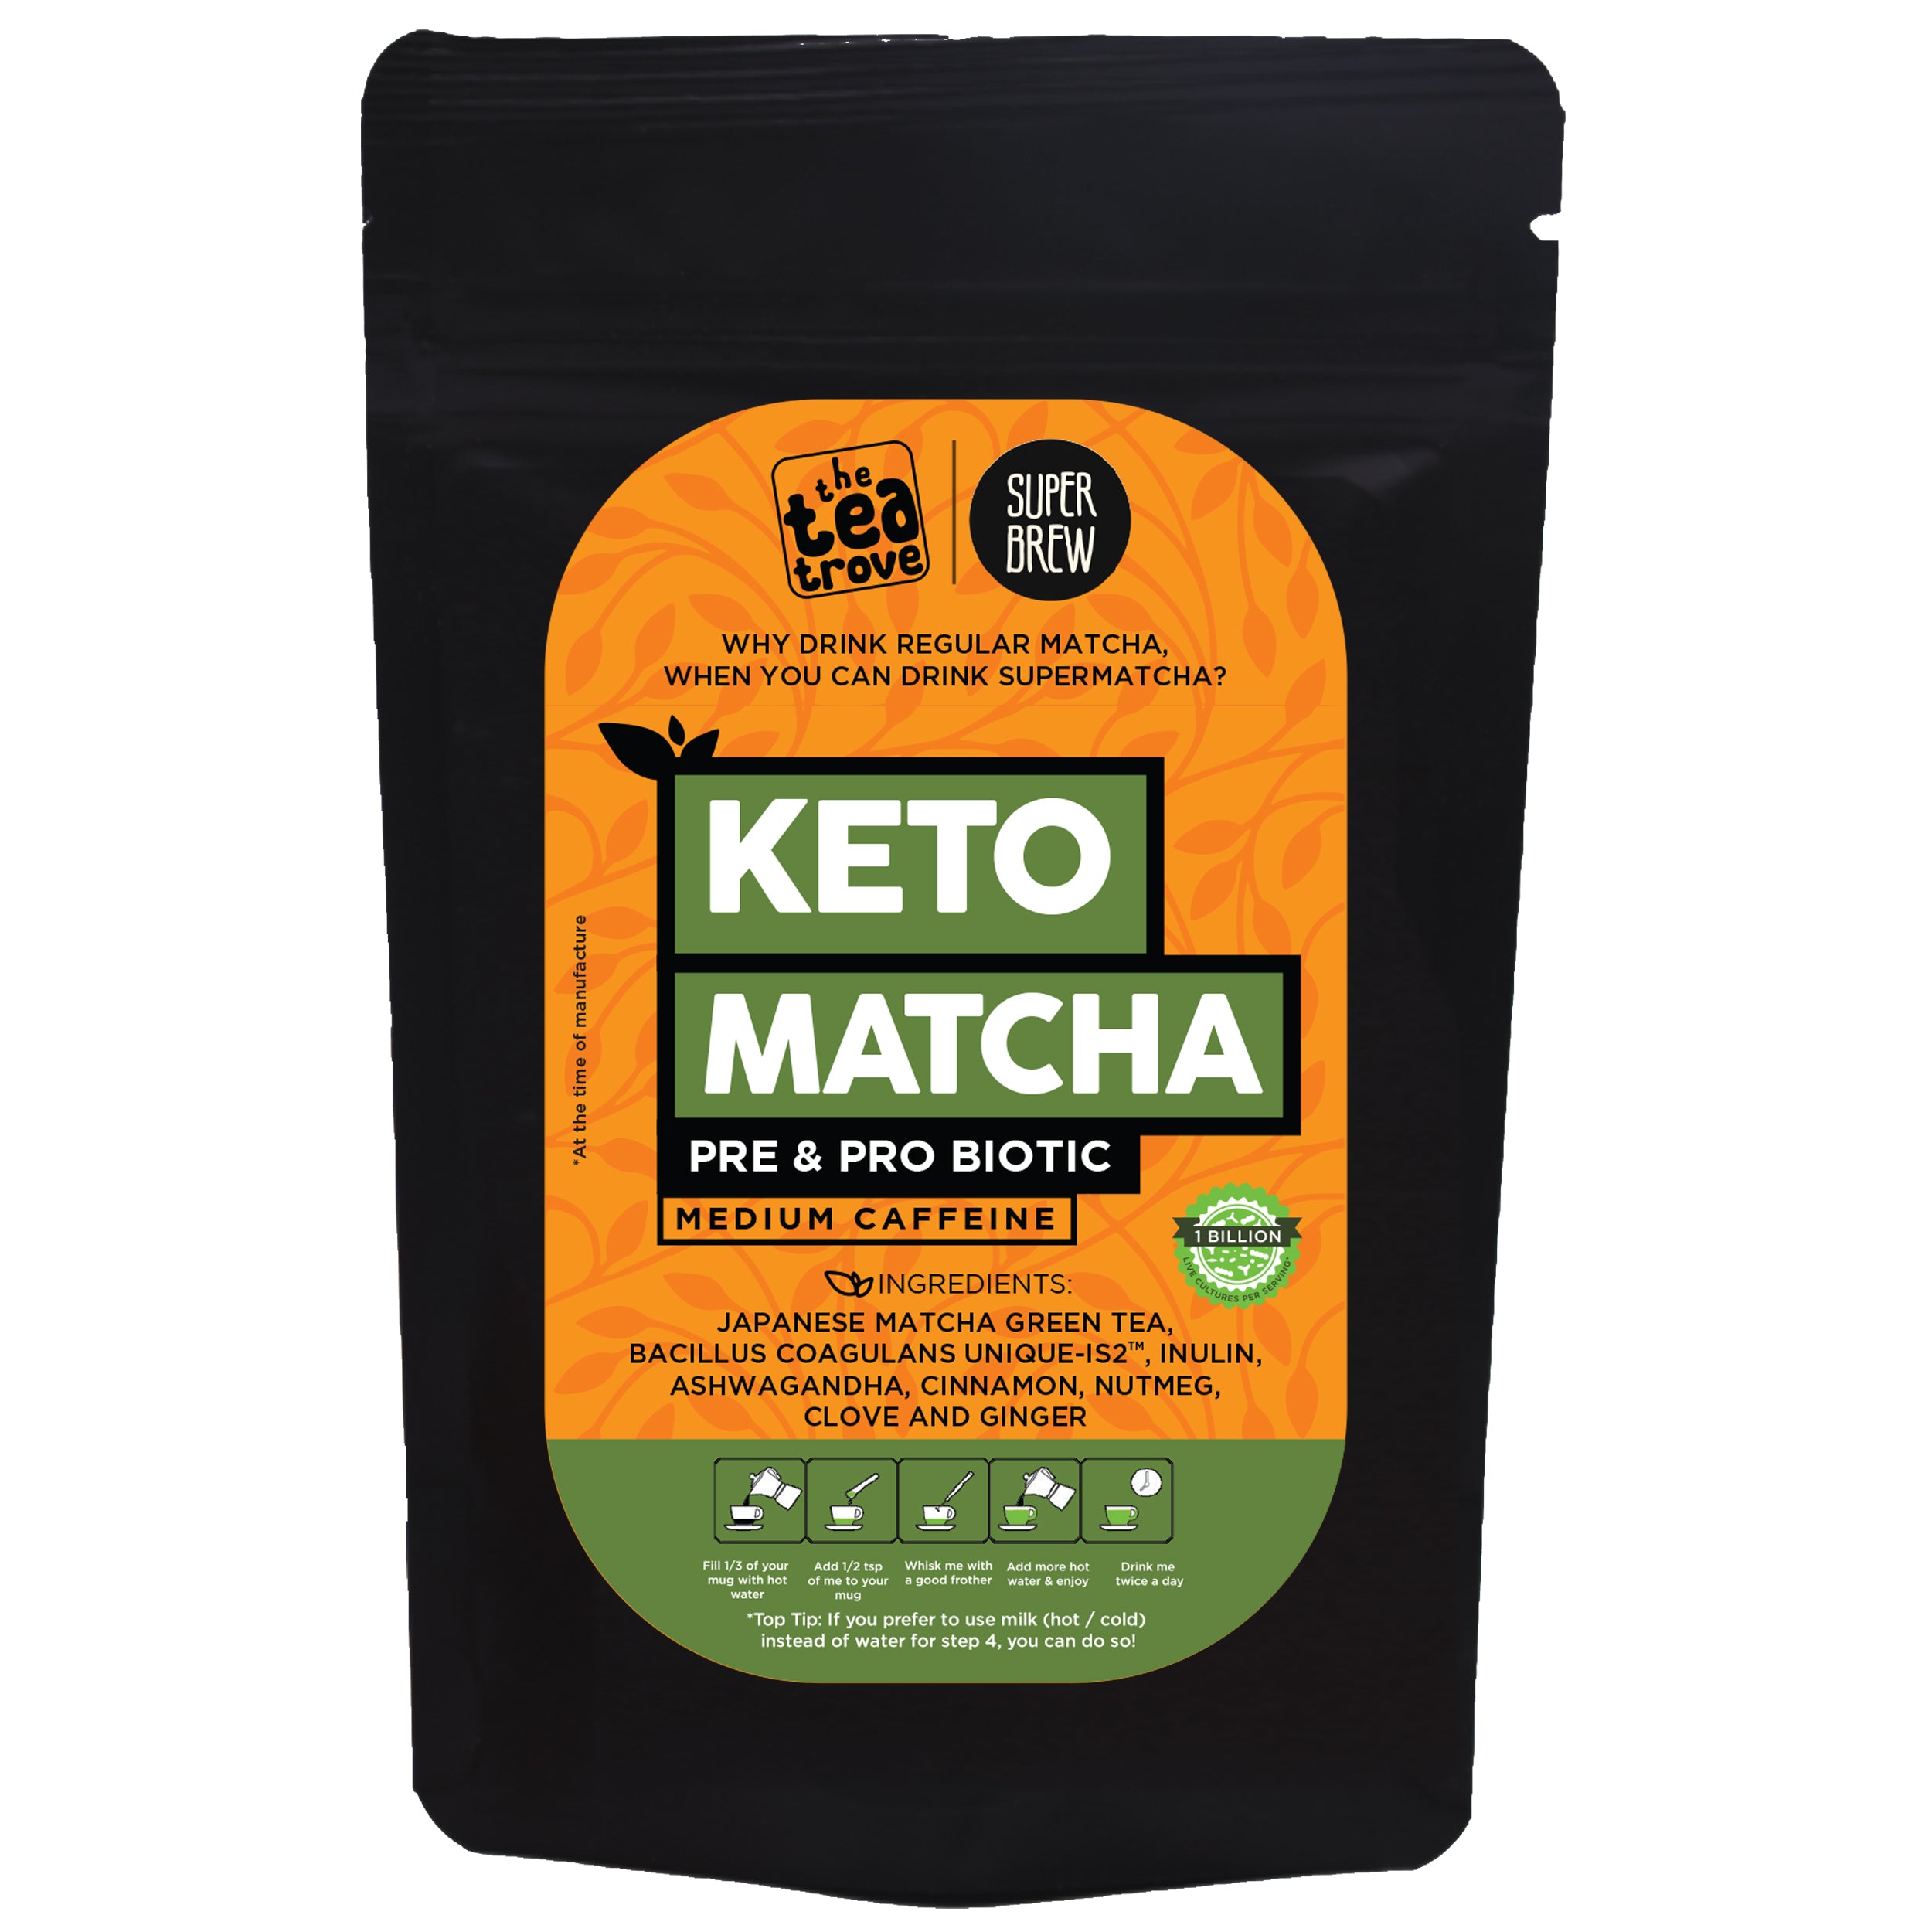 The Tea Trove Superbrew Keto Matcha Probiotic Drink Mix with